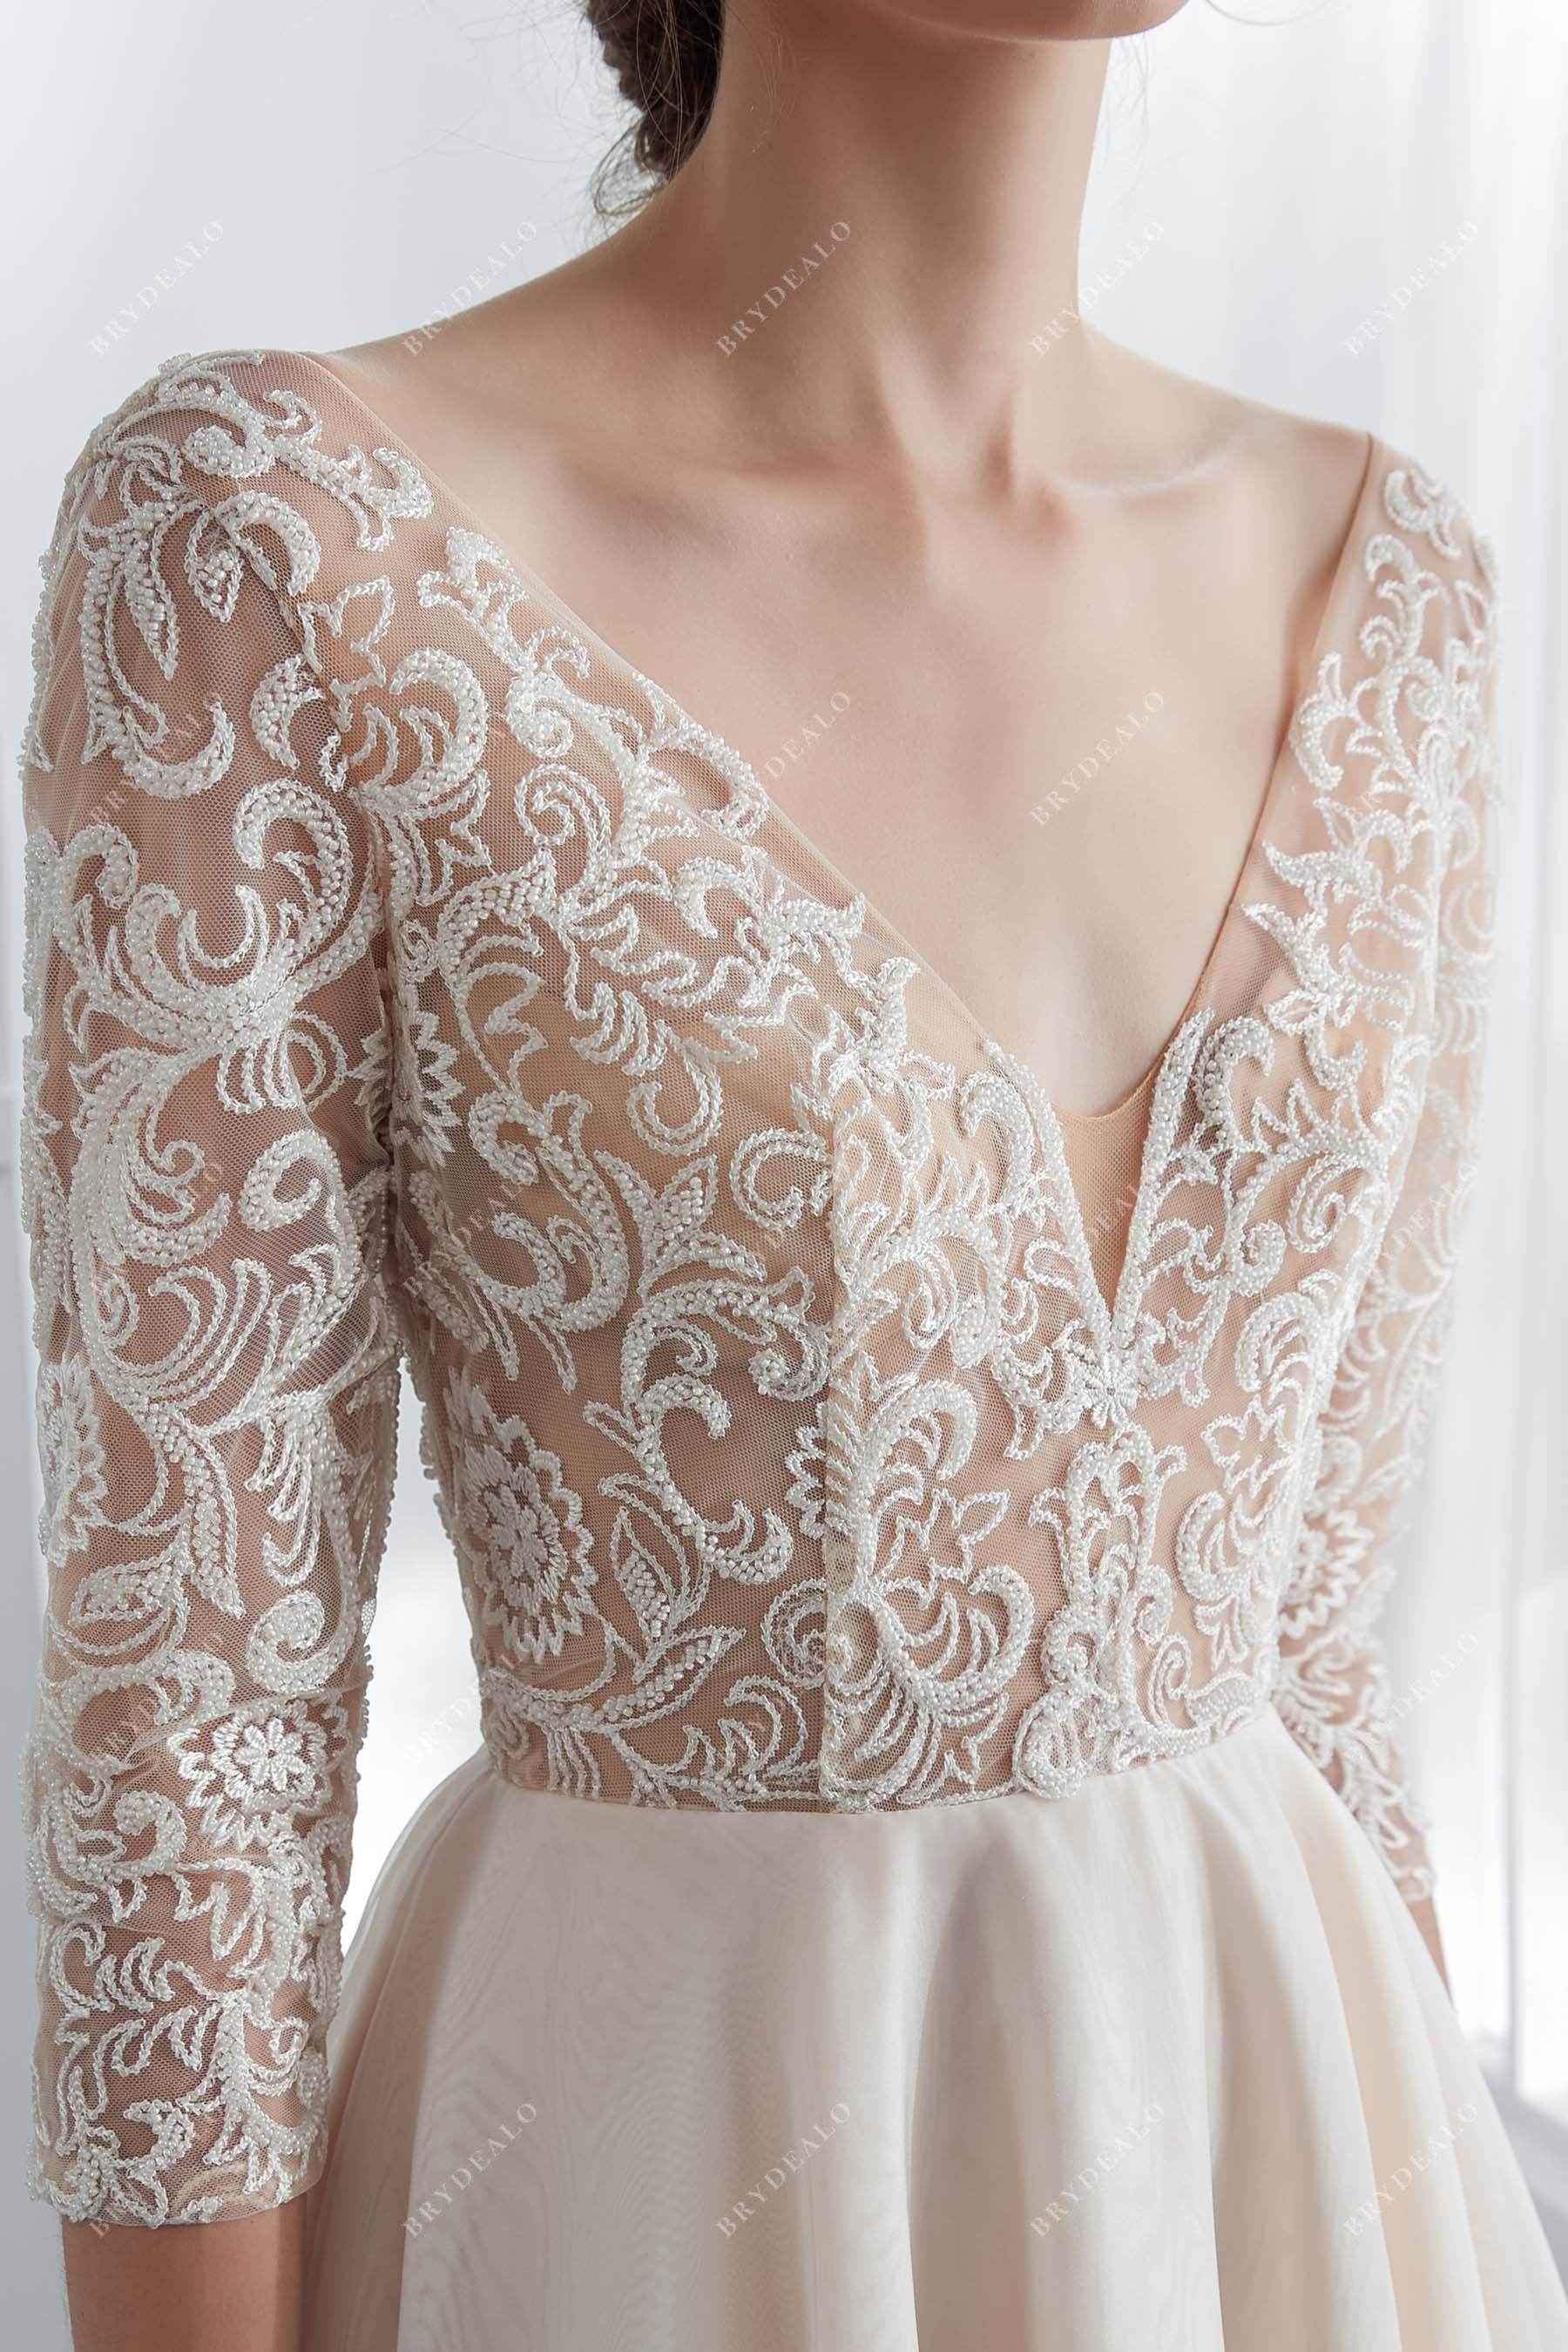 Sheer 3/4 Sleeve Designer Lace Bridal Gown